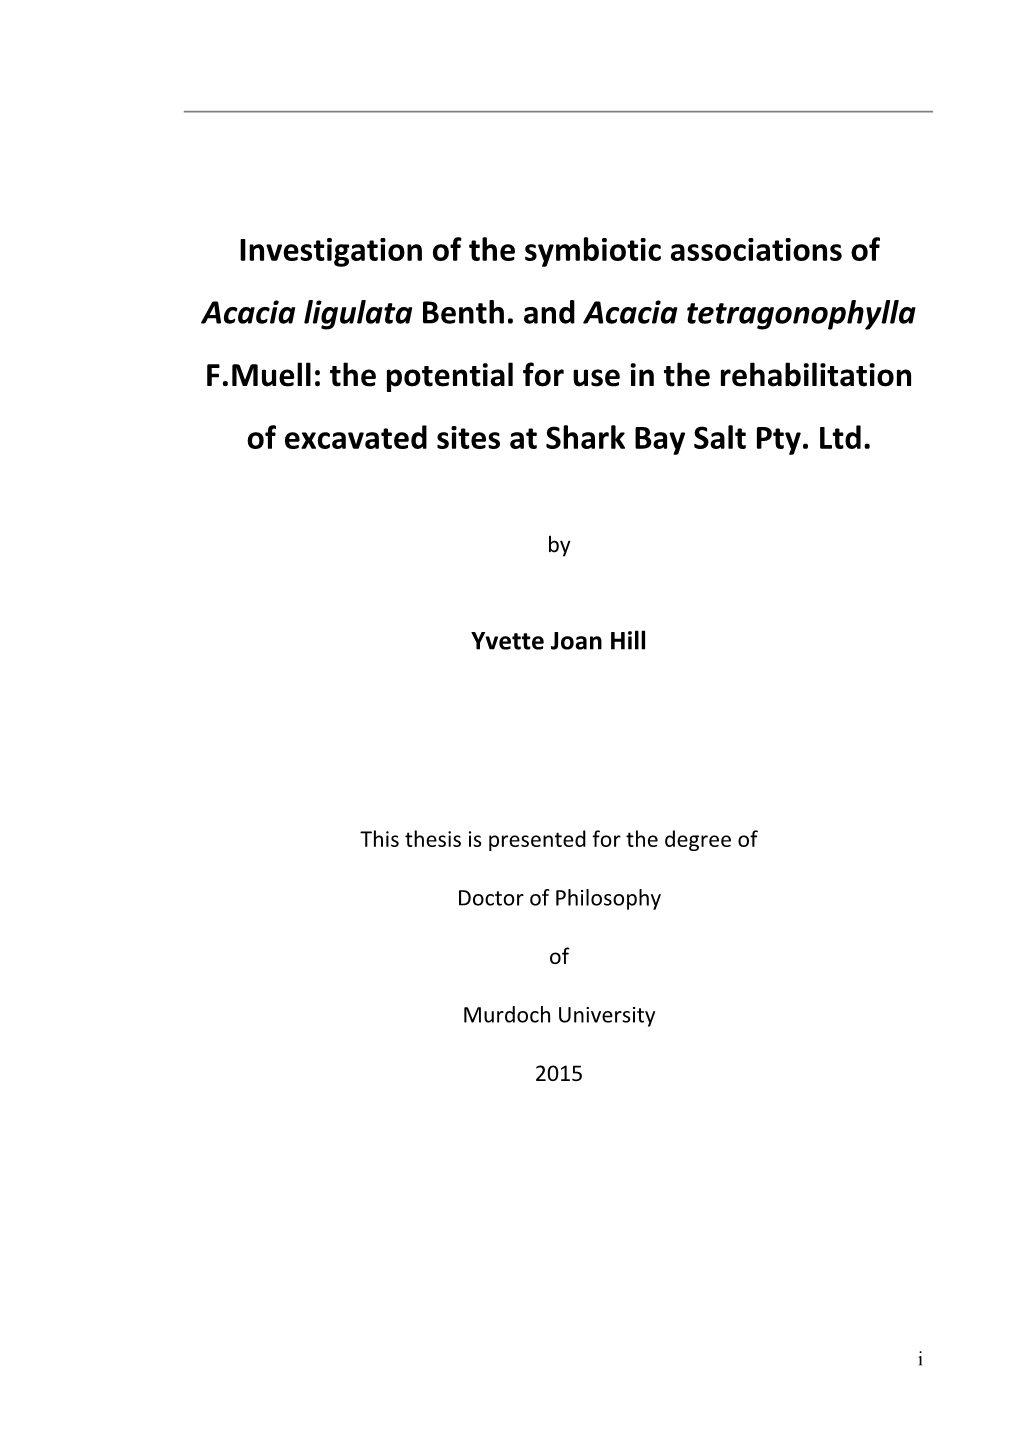 Investigation of the Symbiotic Associations of Acacia Ligulata Benth